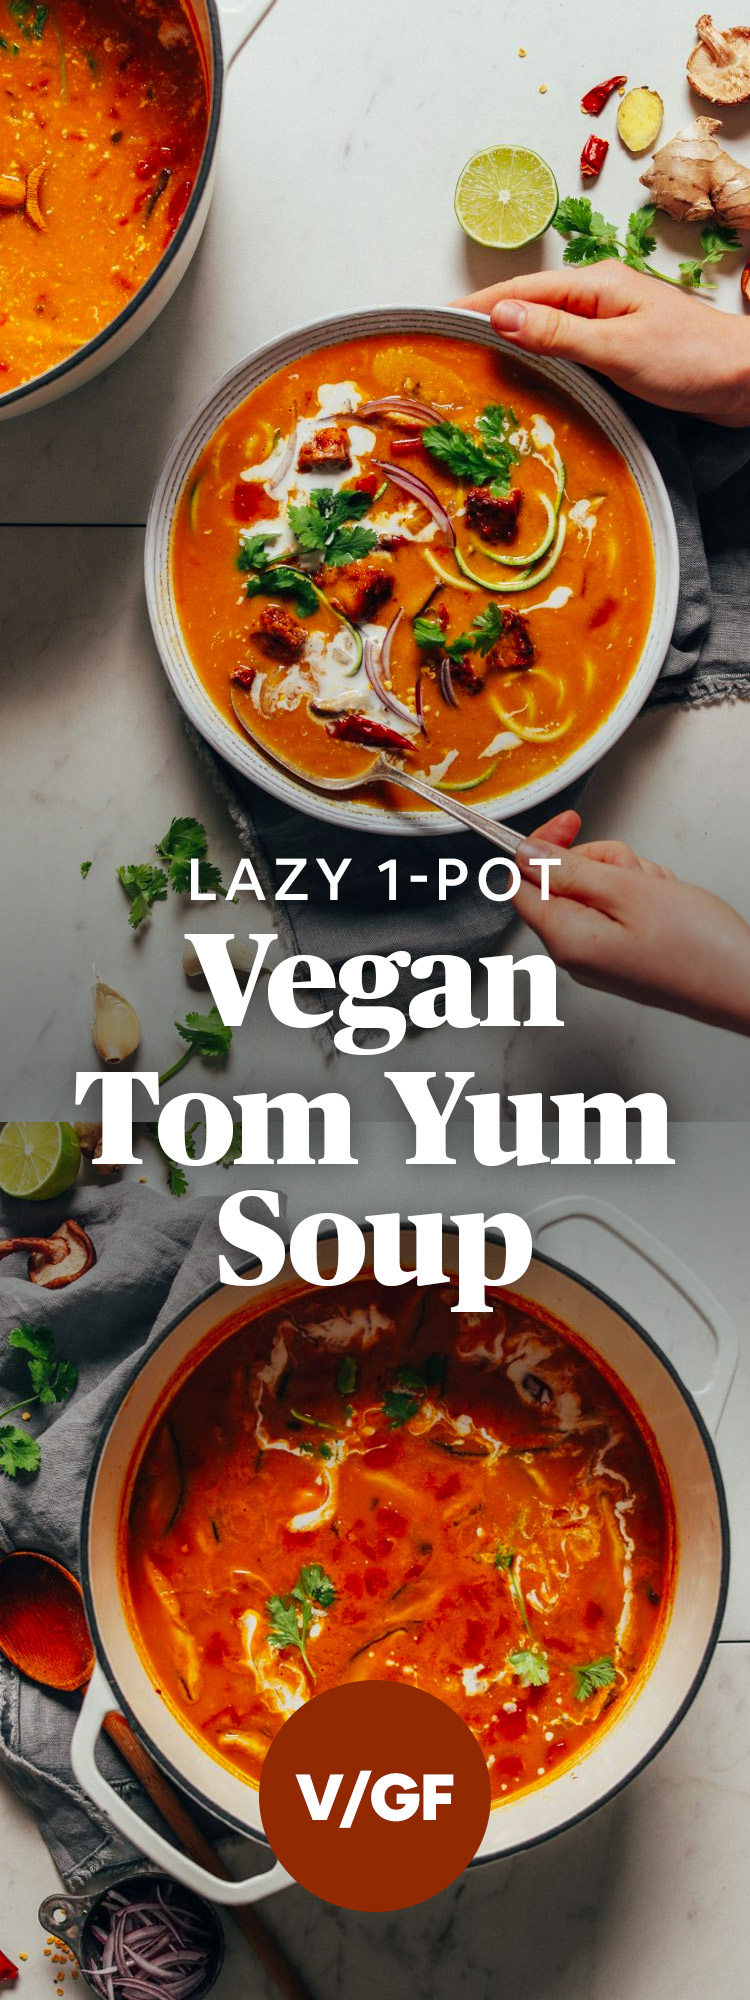 Easy 1-Pot Vegan Tom Yum Soup | Minimalist Baker Recipes